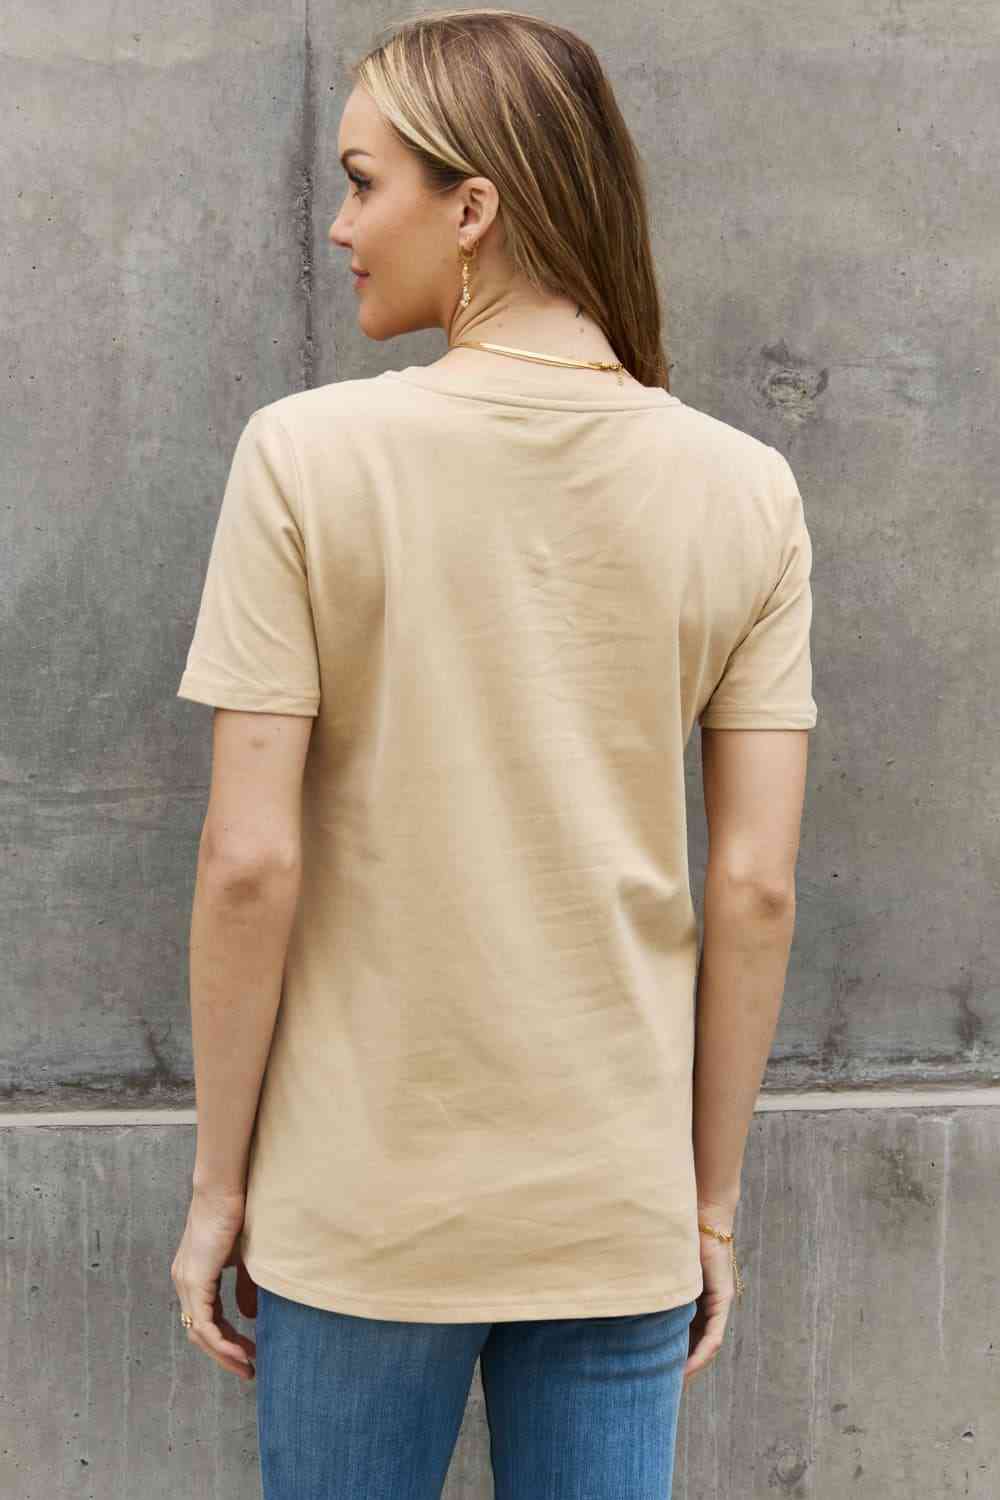 WINOSAUR Graphic Cotton T-Shirt - T-Shirts - Shirts & Tops - 6 - 2024